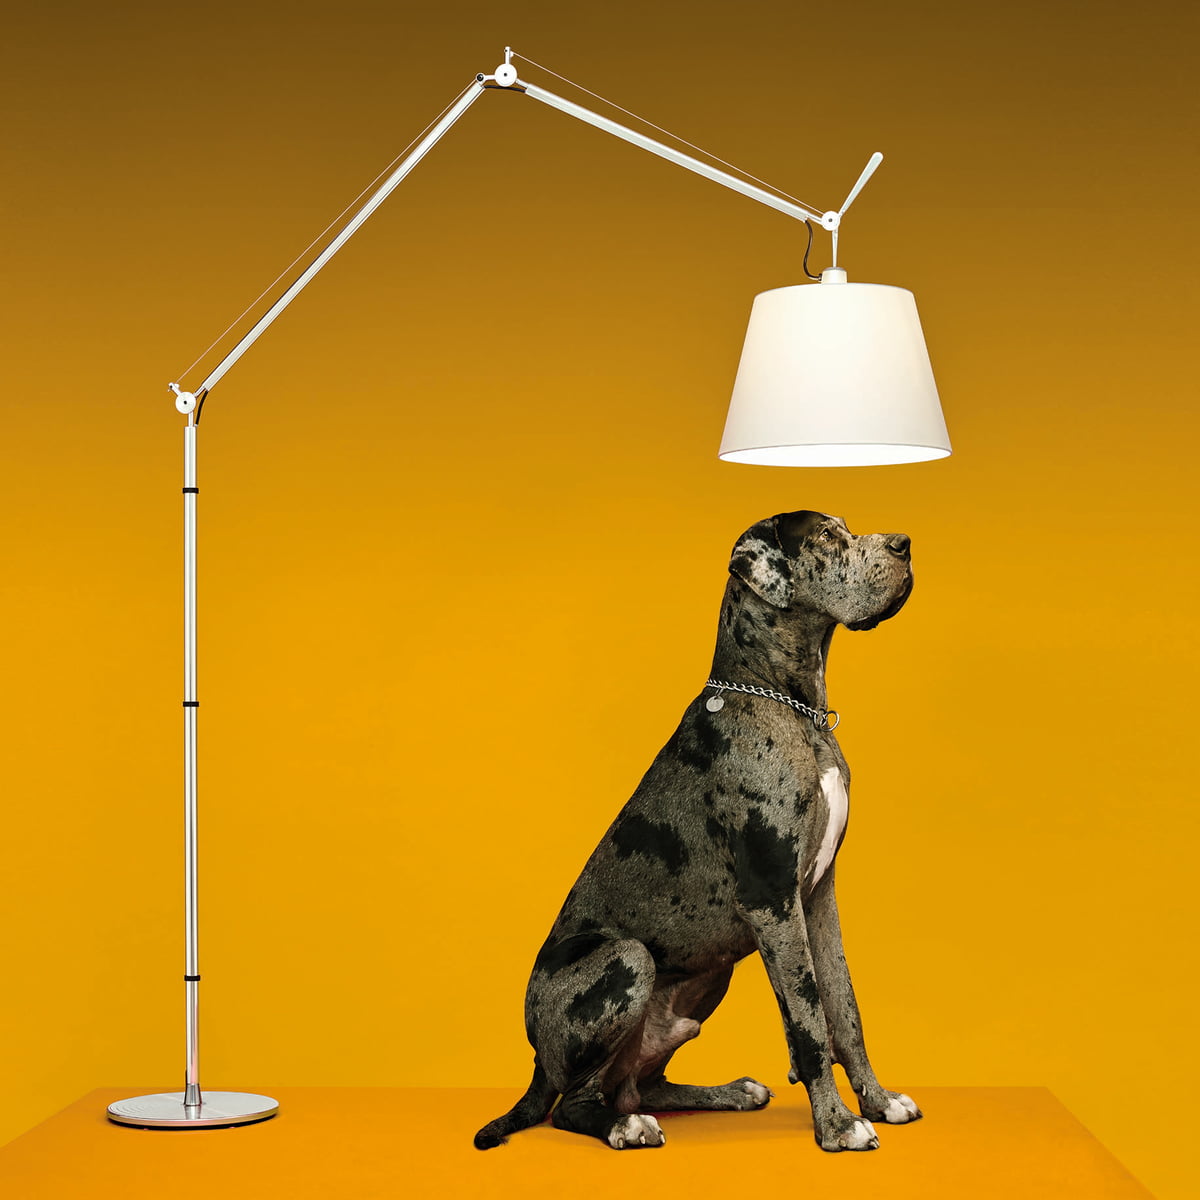 Artemide Tolomeo Classic LED Floor Lamp